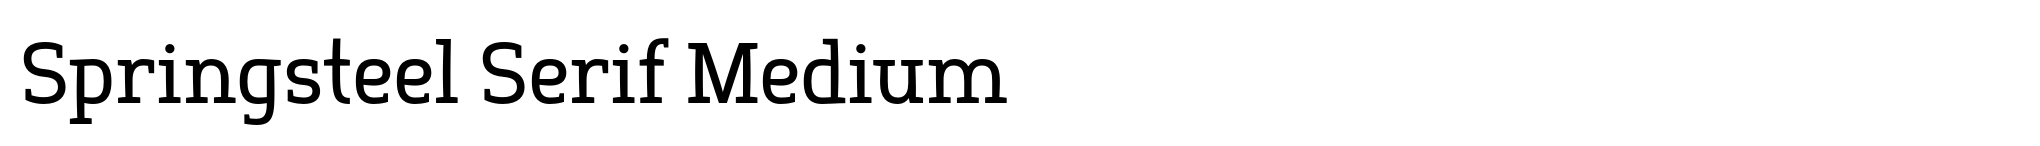 Springsteel Serif Medium image